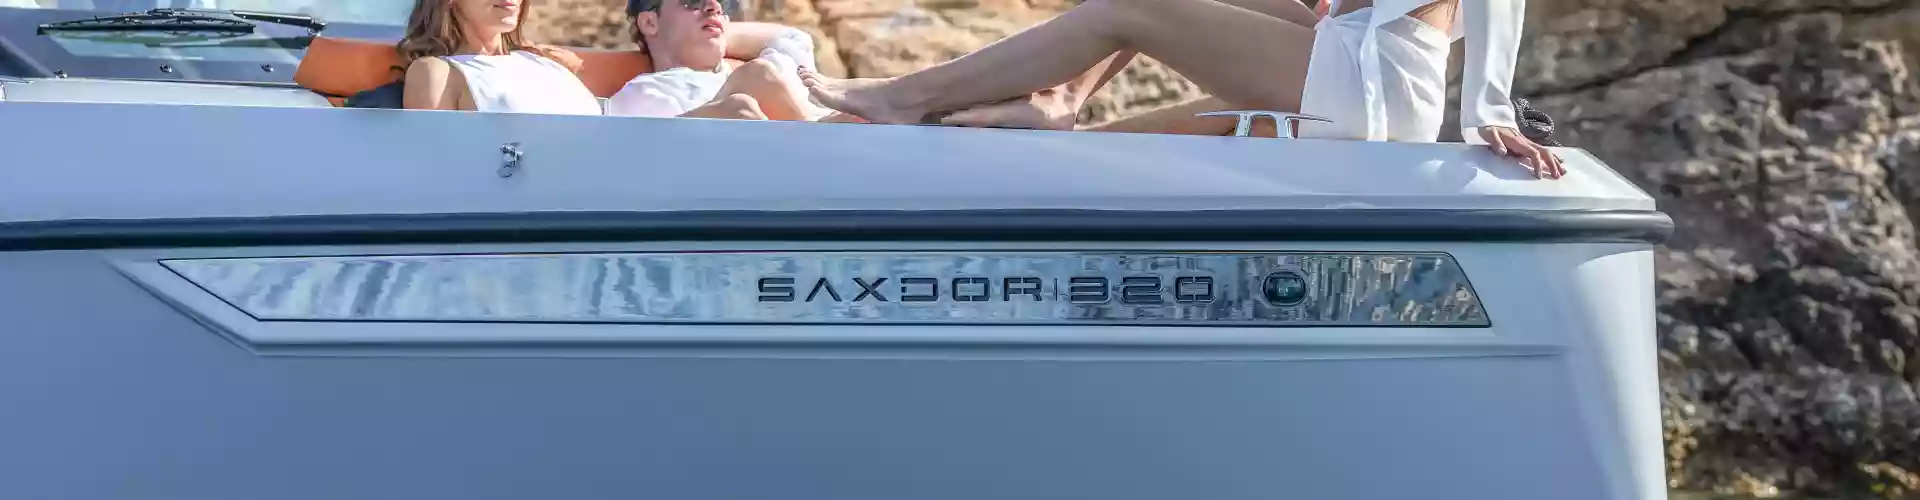 Motoryacht Saxdor 320 GTO